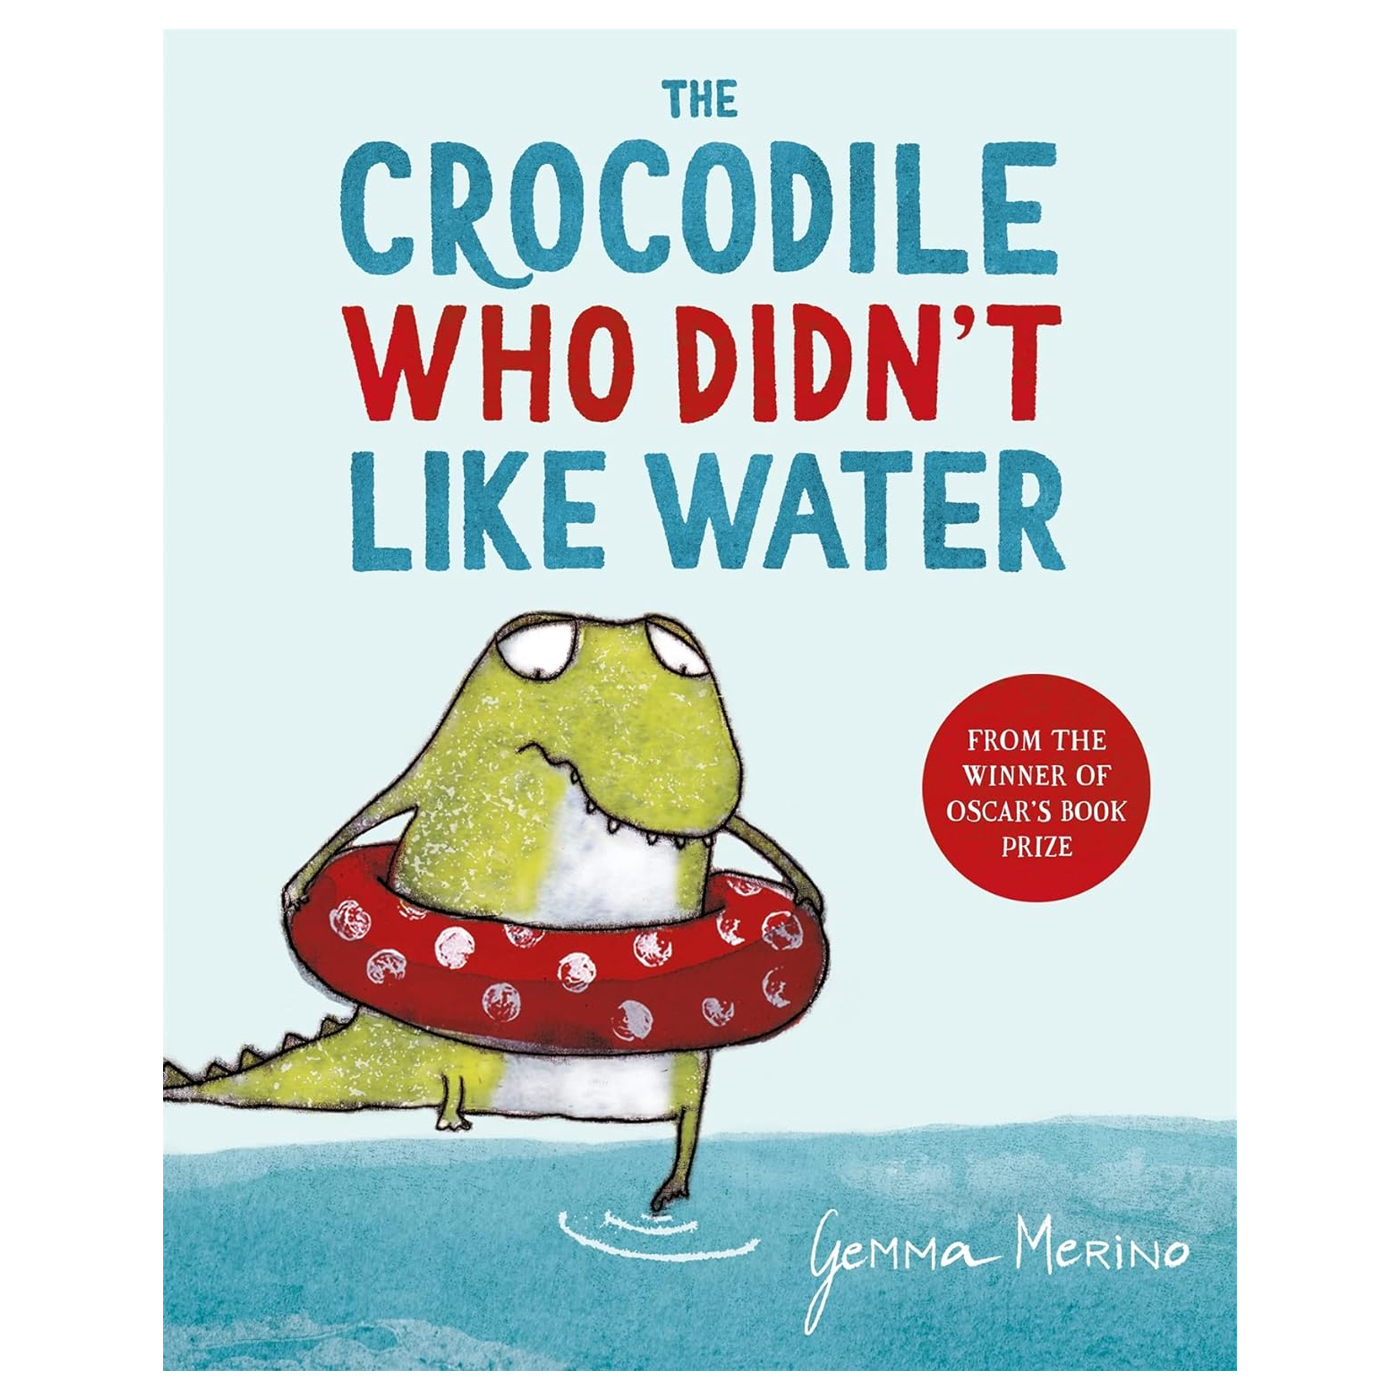  The Crocodile Who Didn't Like Water